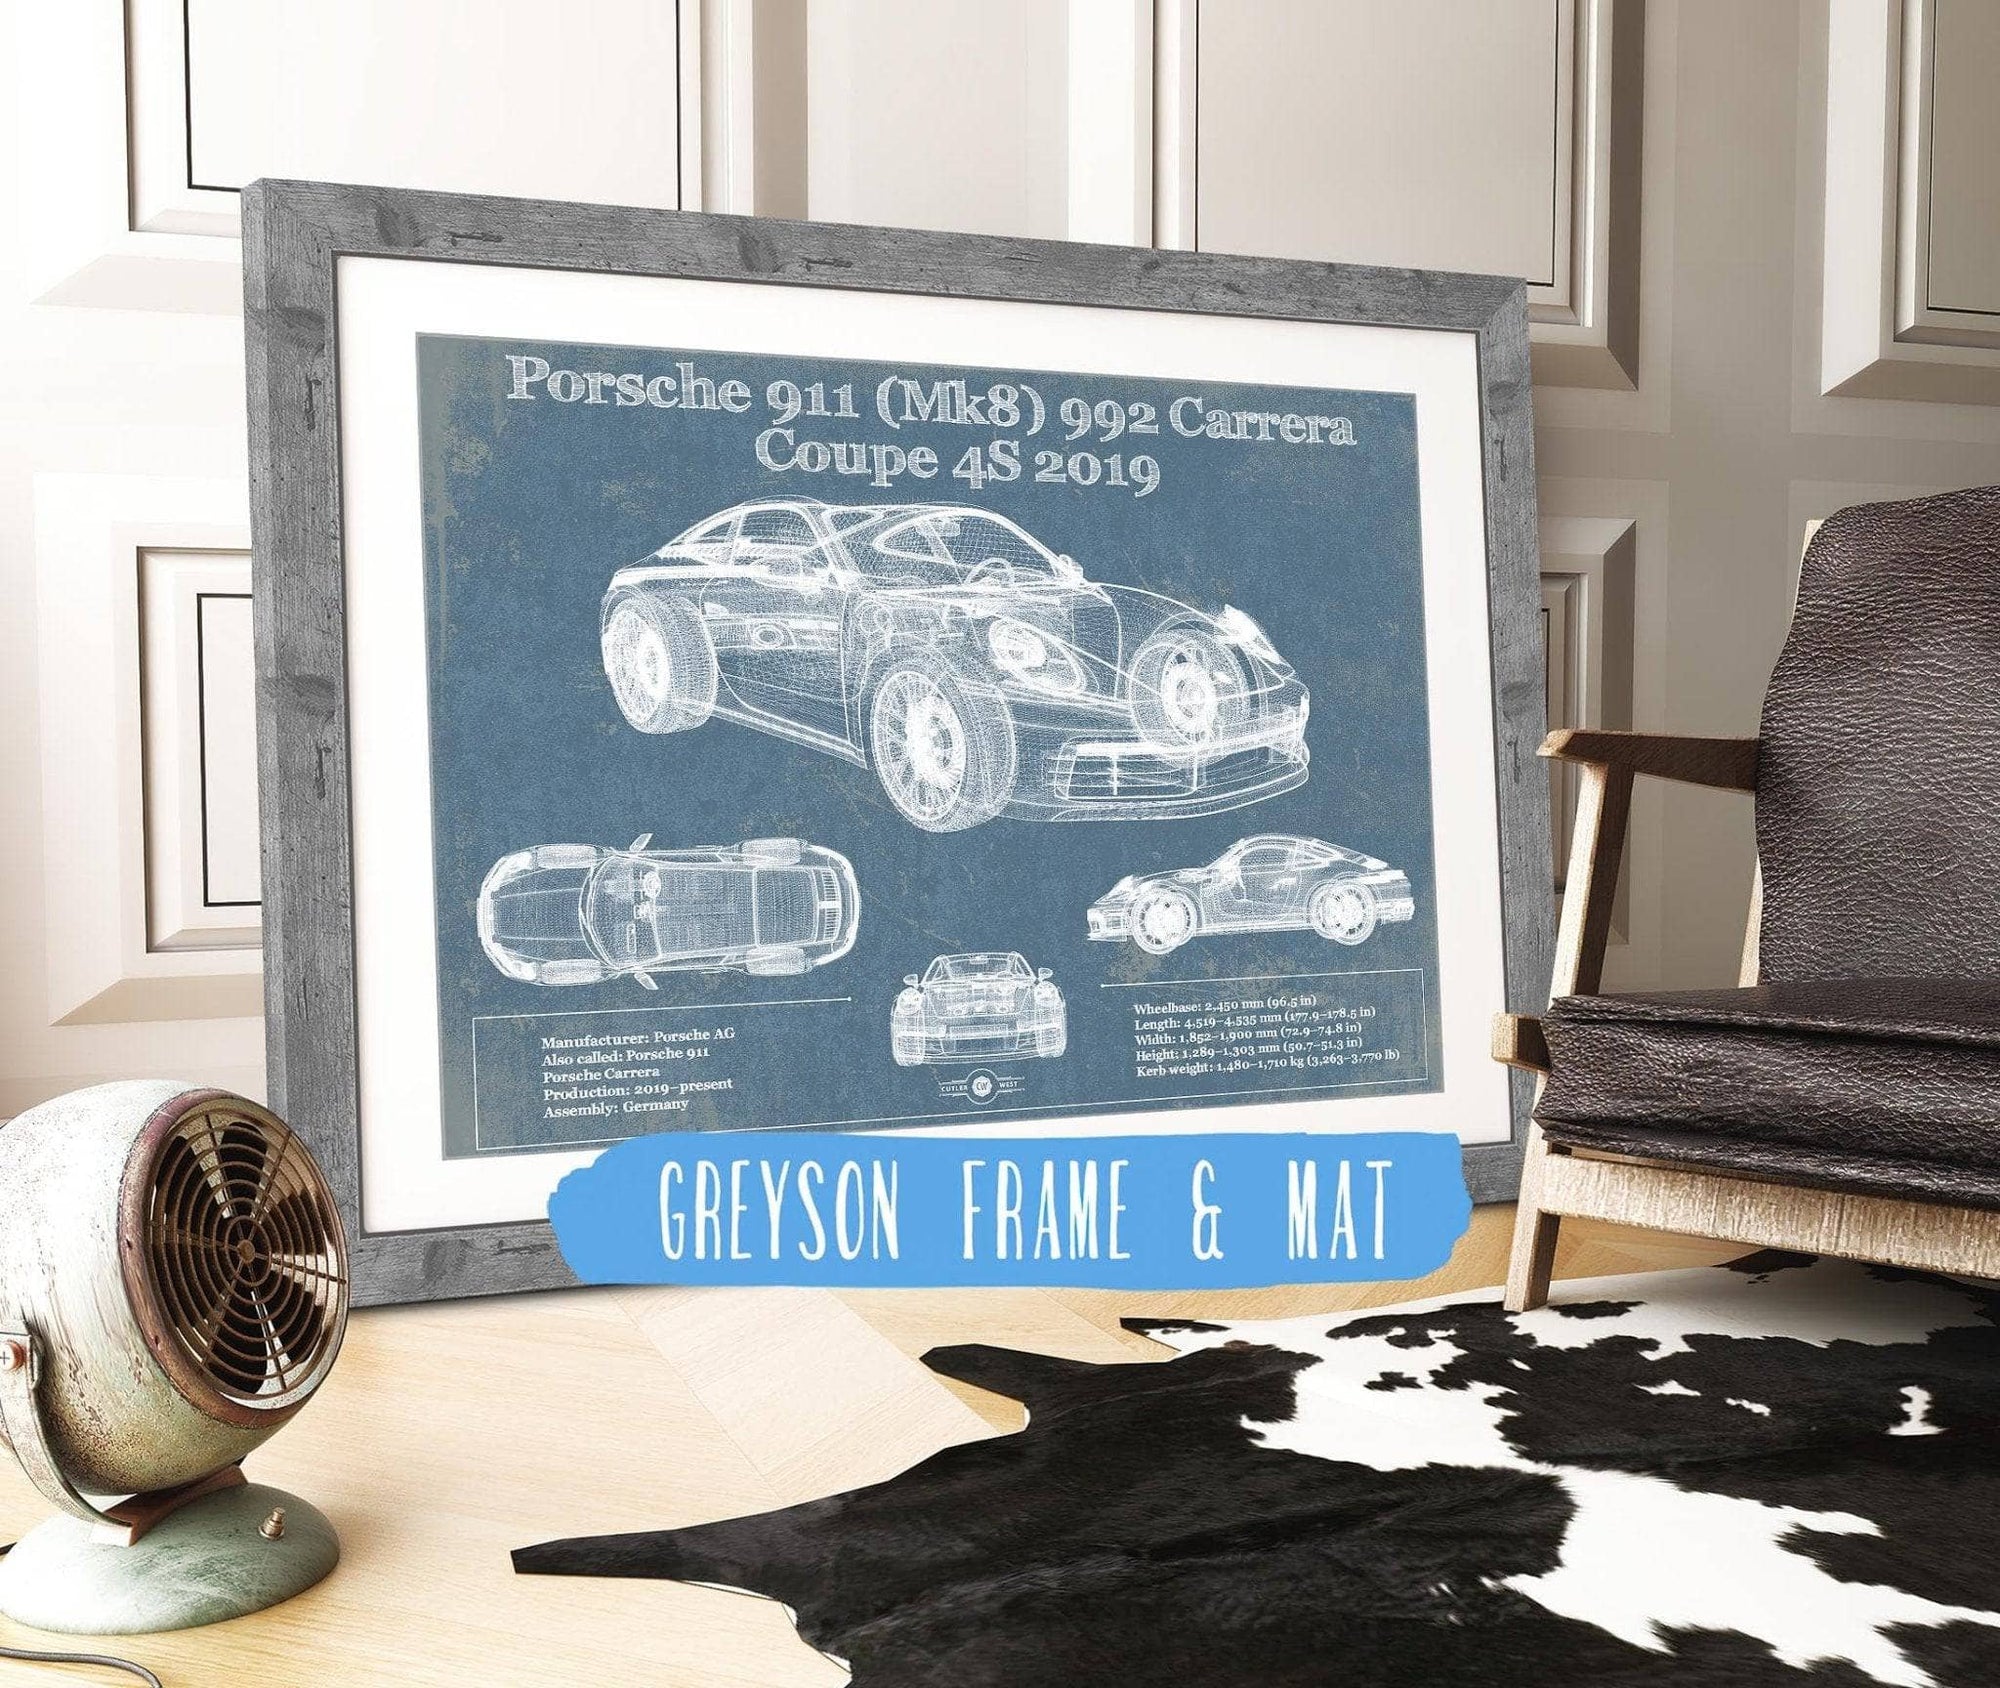 Cutler West Porsche Collection 14" x 11" / Greyson Frame & Mat Porsche 911 Mk8 992 Carrera Coupe 4s 2019 Vintage Blueprint Auto Print 845000299_68561